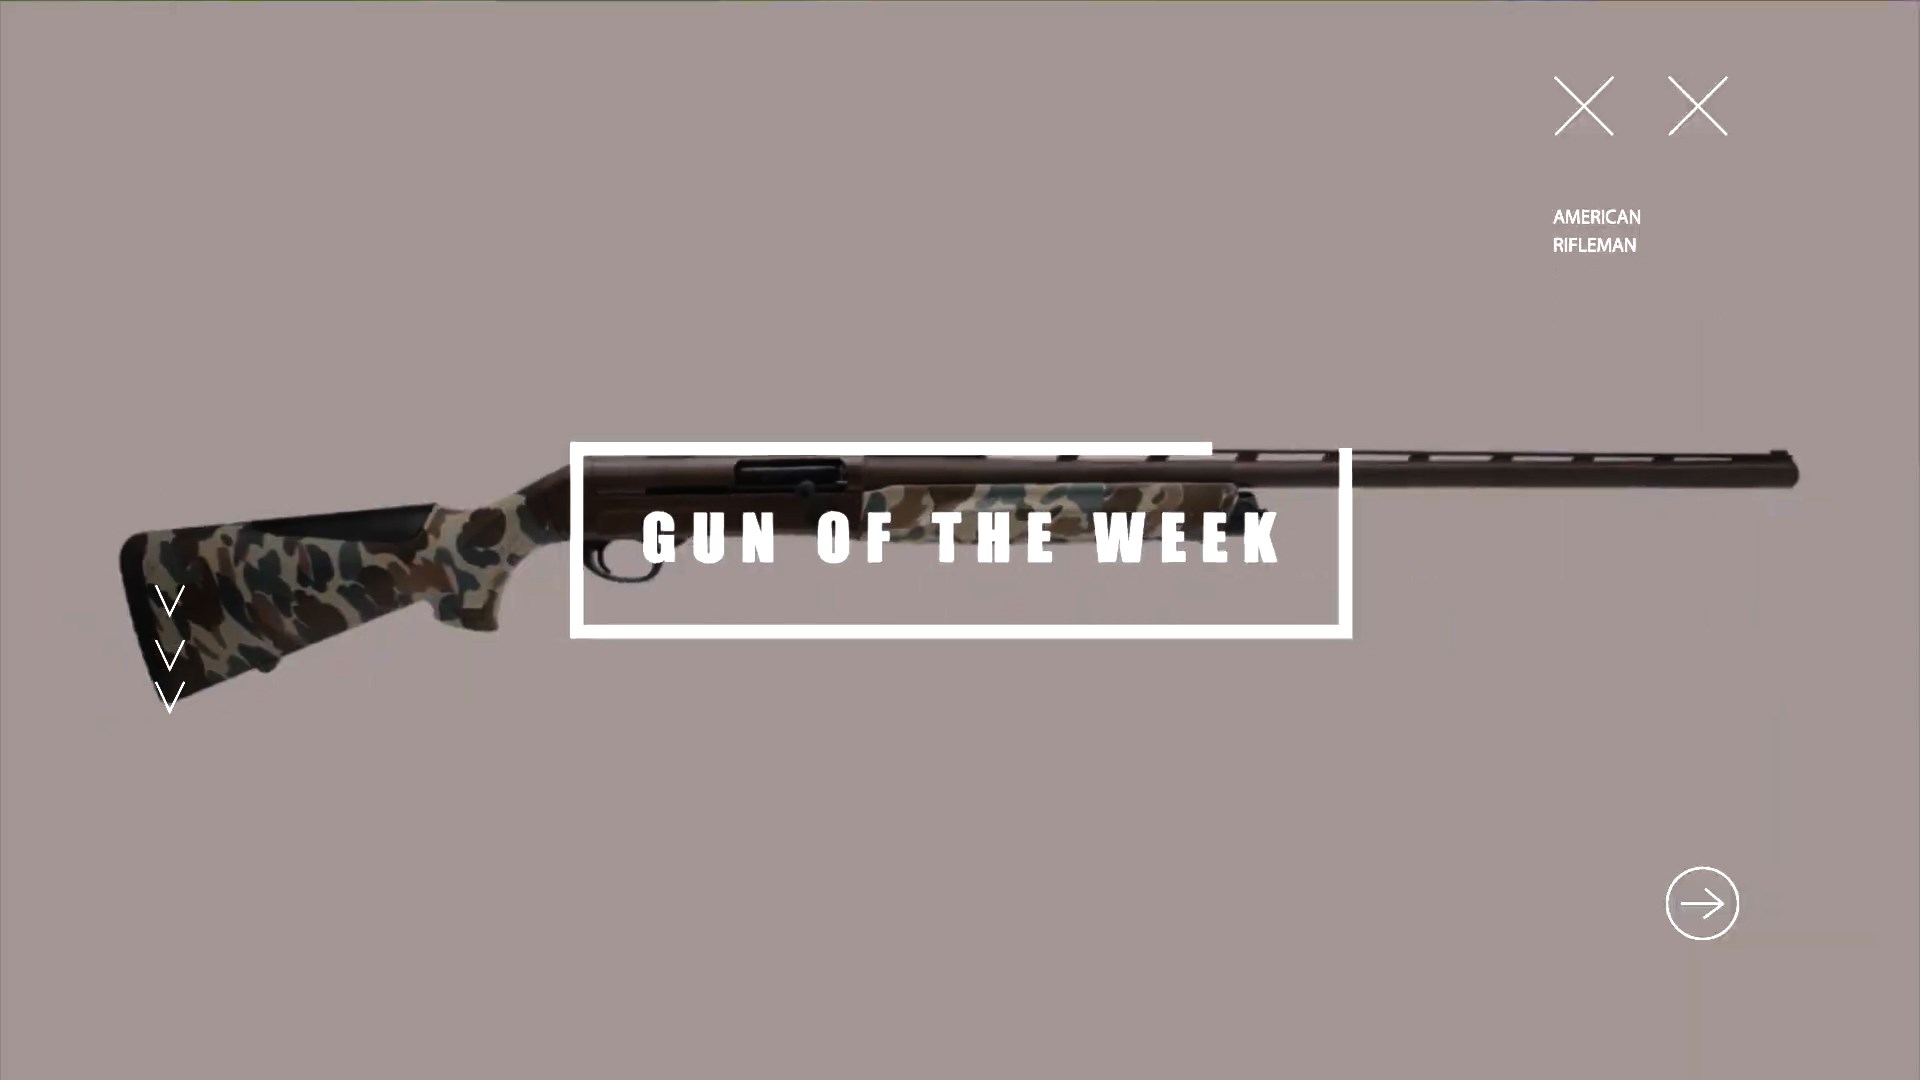 GUN OF THE WEEK title screen text overlay Sauer SL5 Waterfowl shotgun background on gray